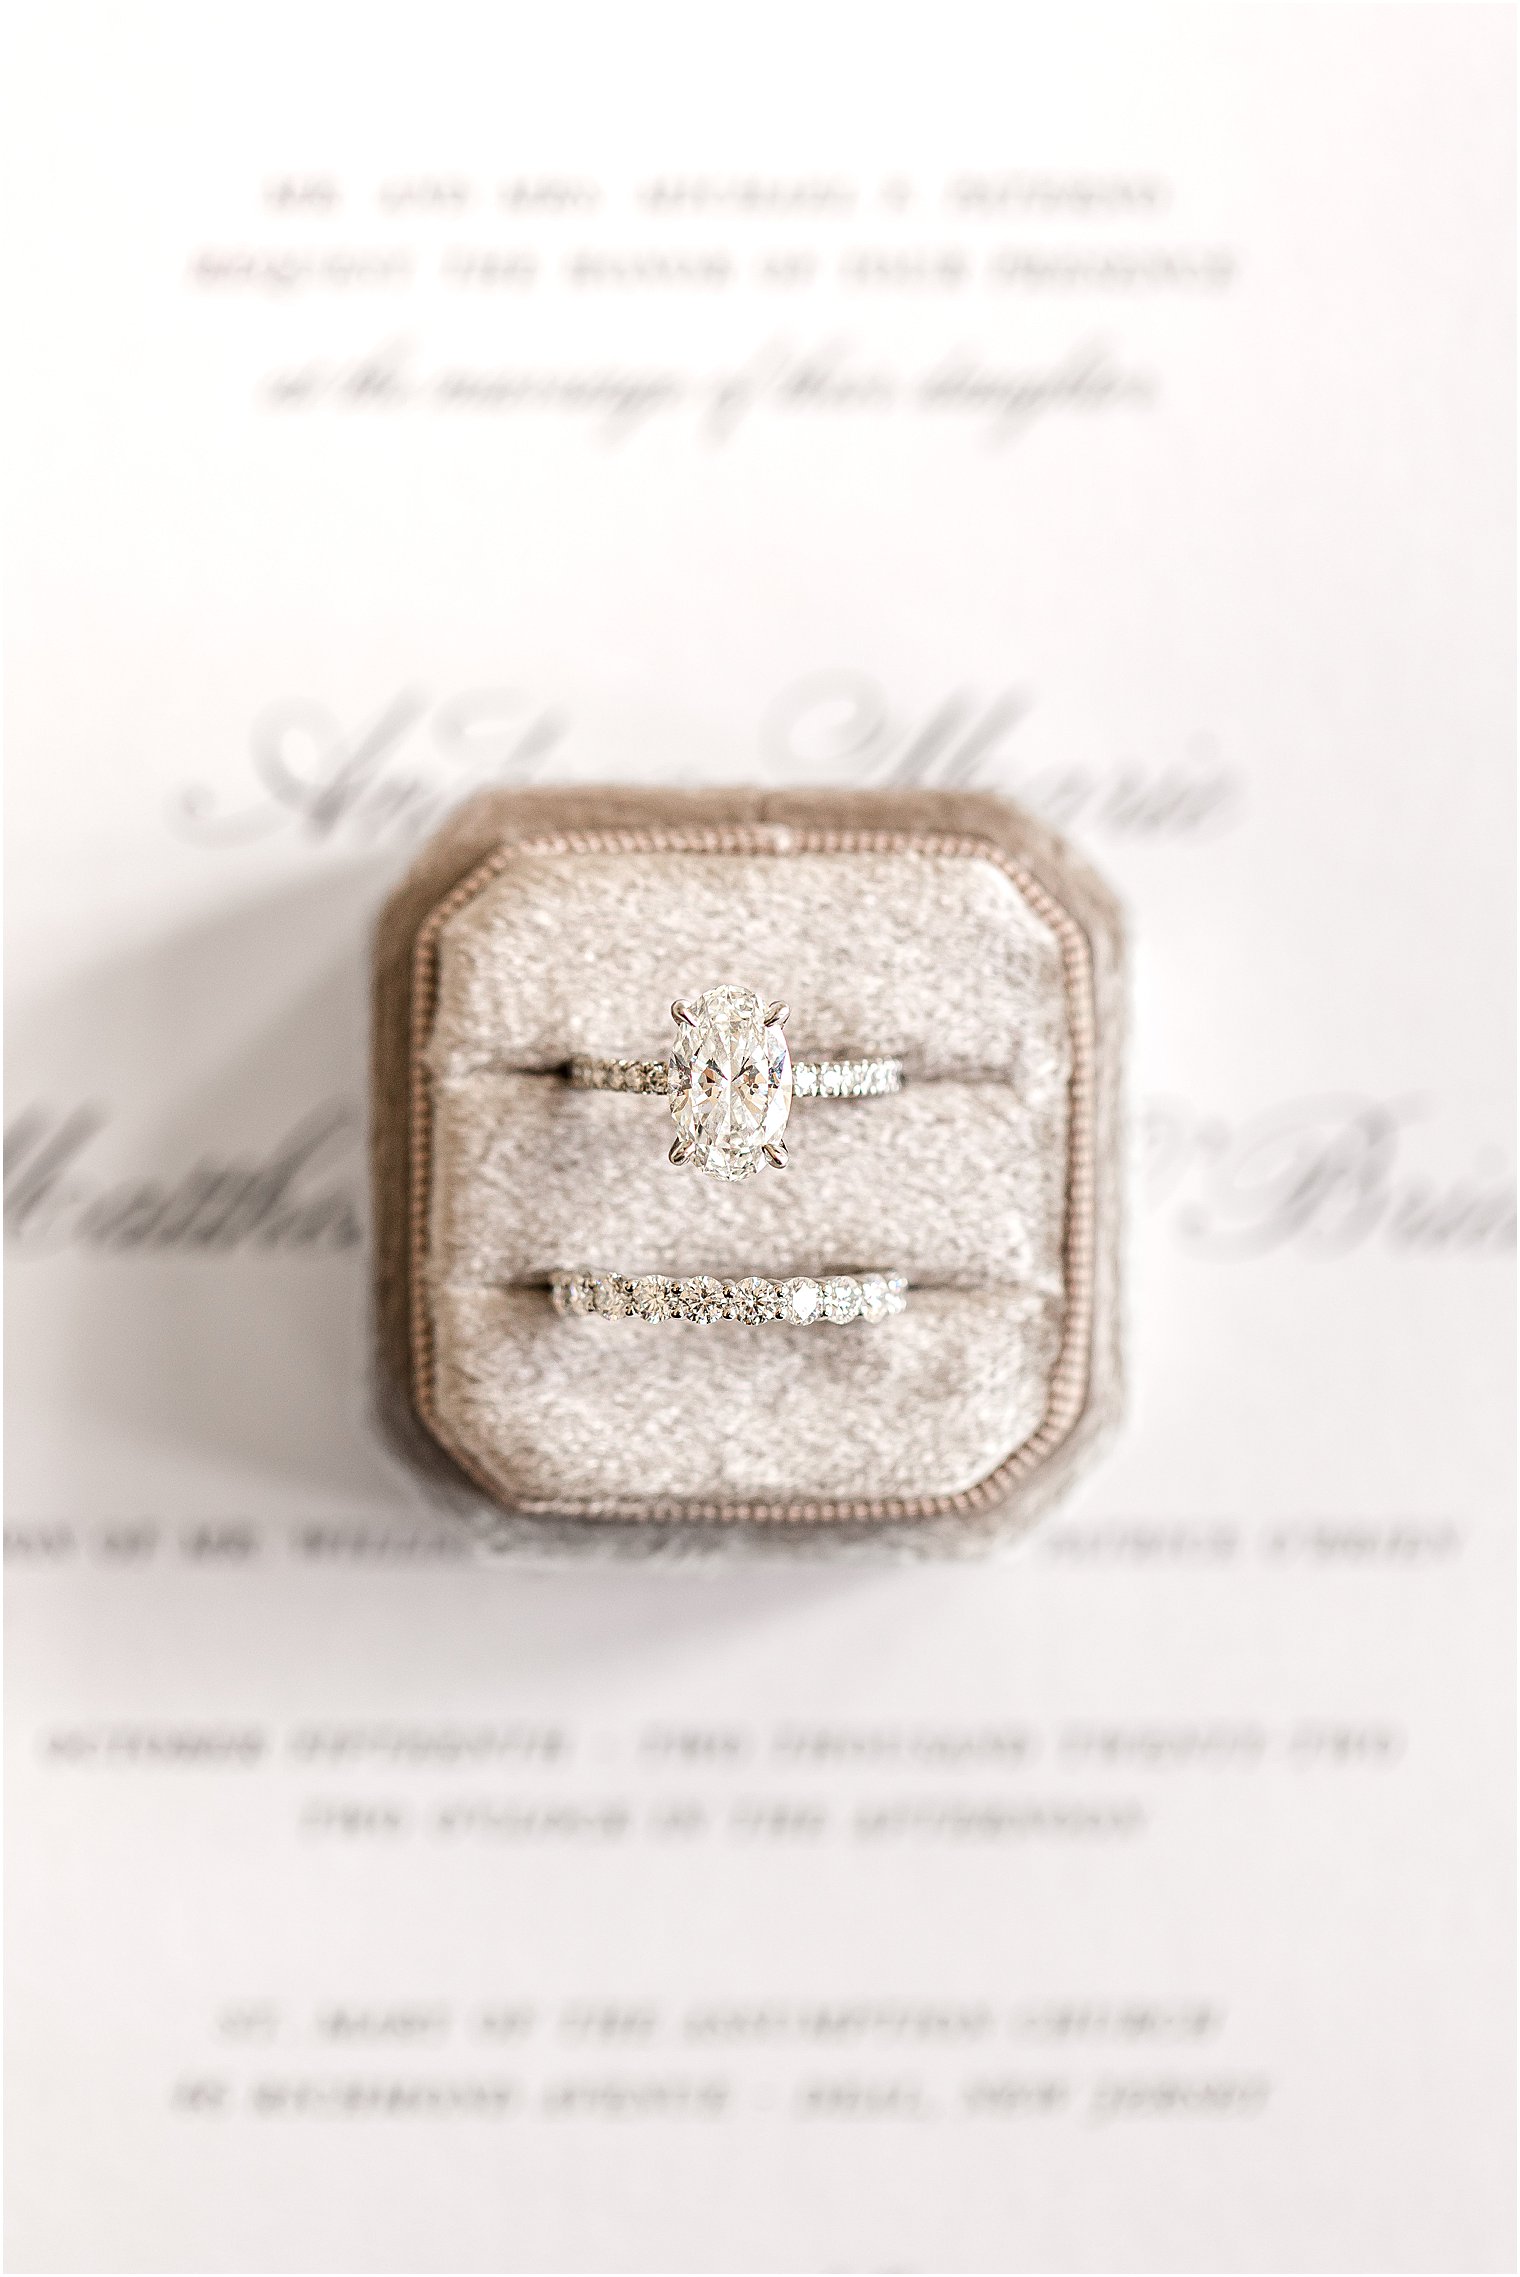 bride's ring box with diamond rings